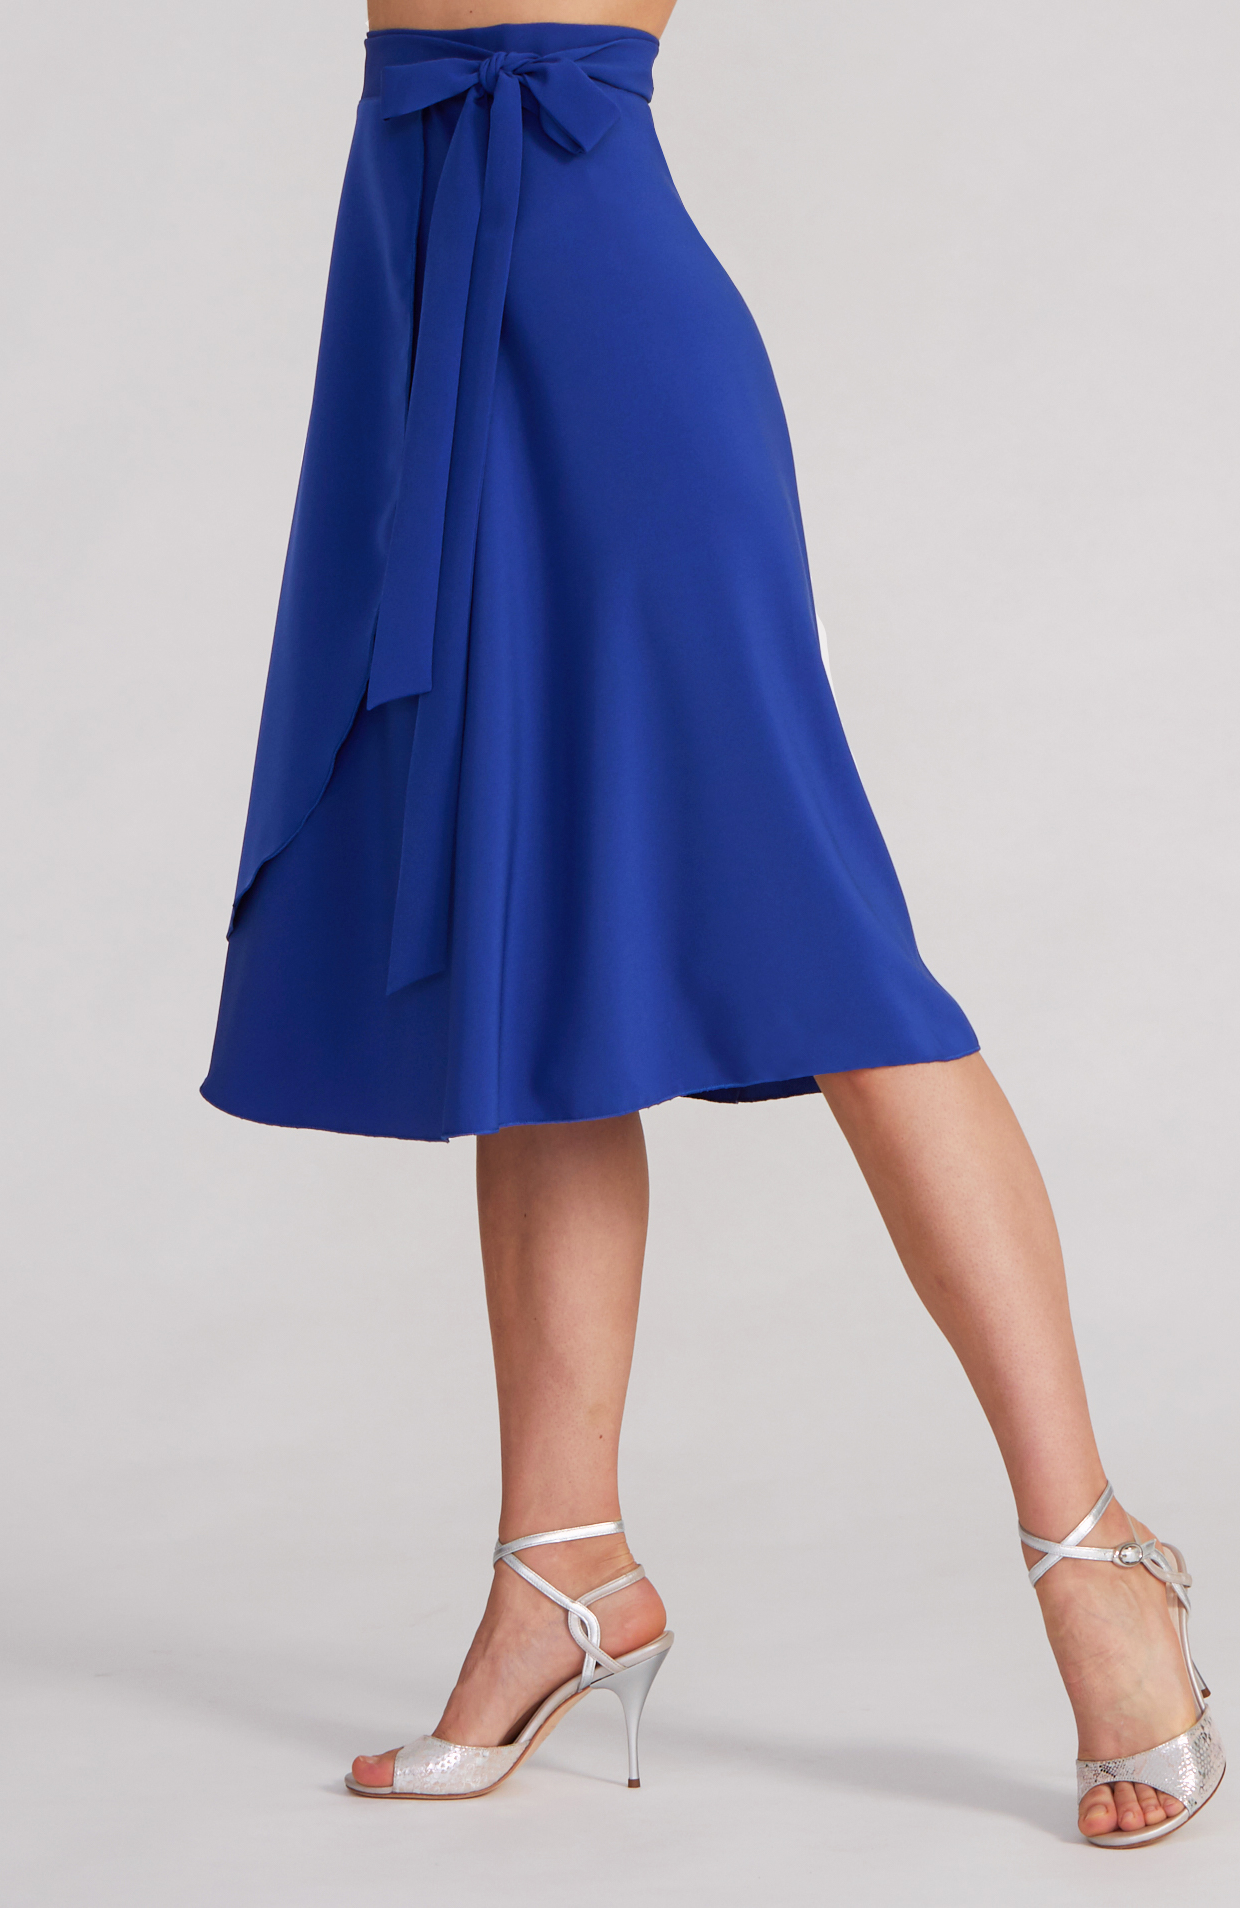 COCO - Royal Blue Wrap Skirt